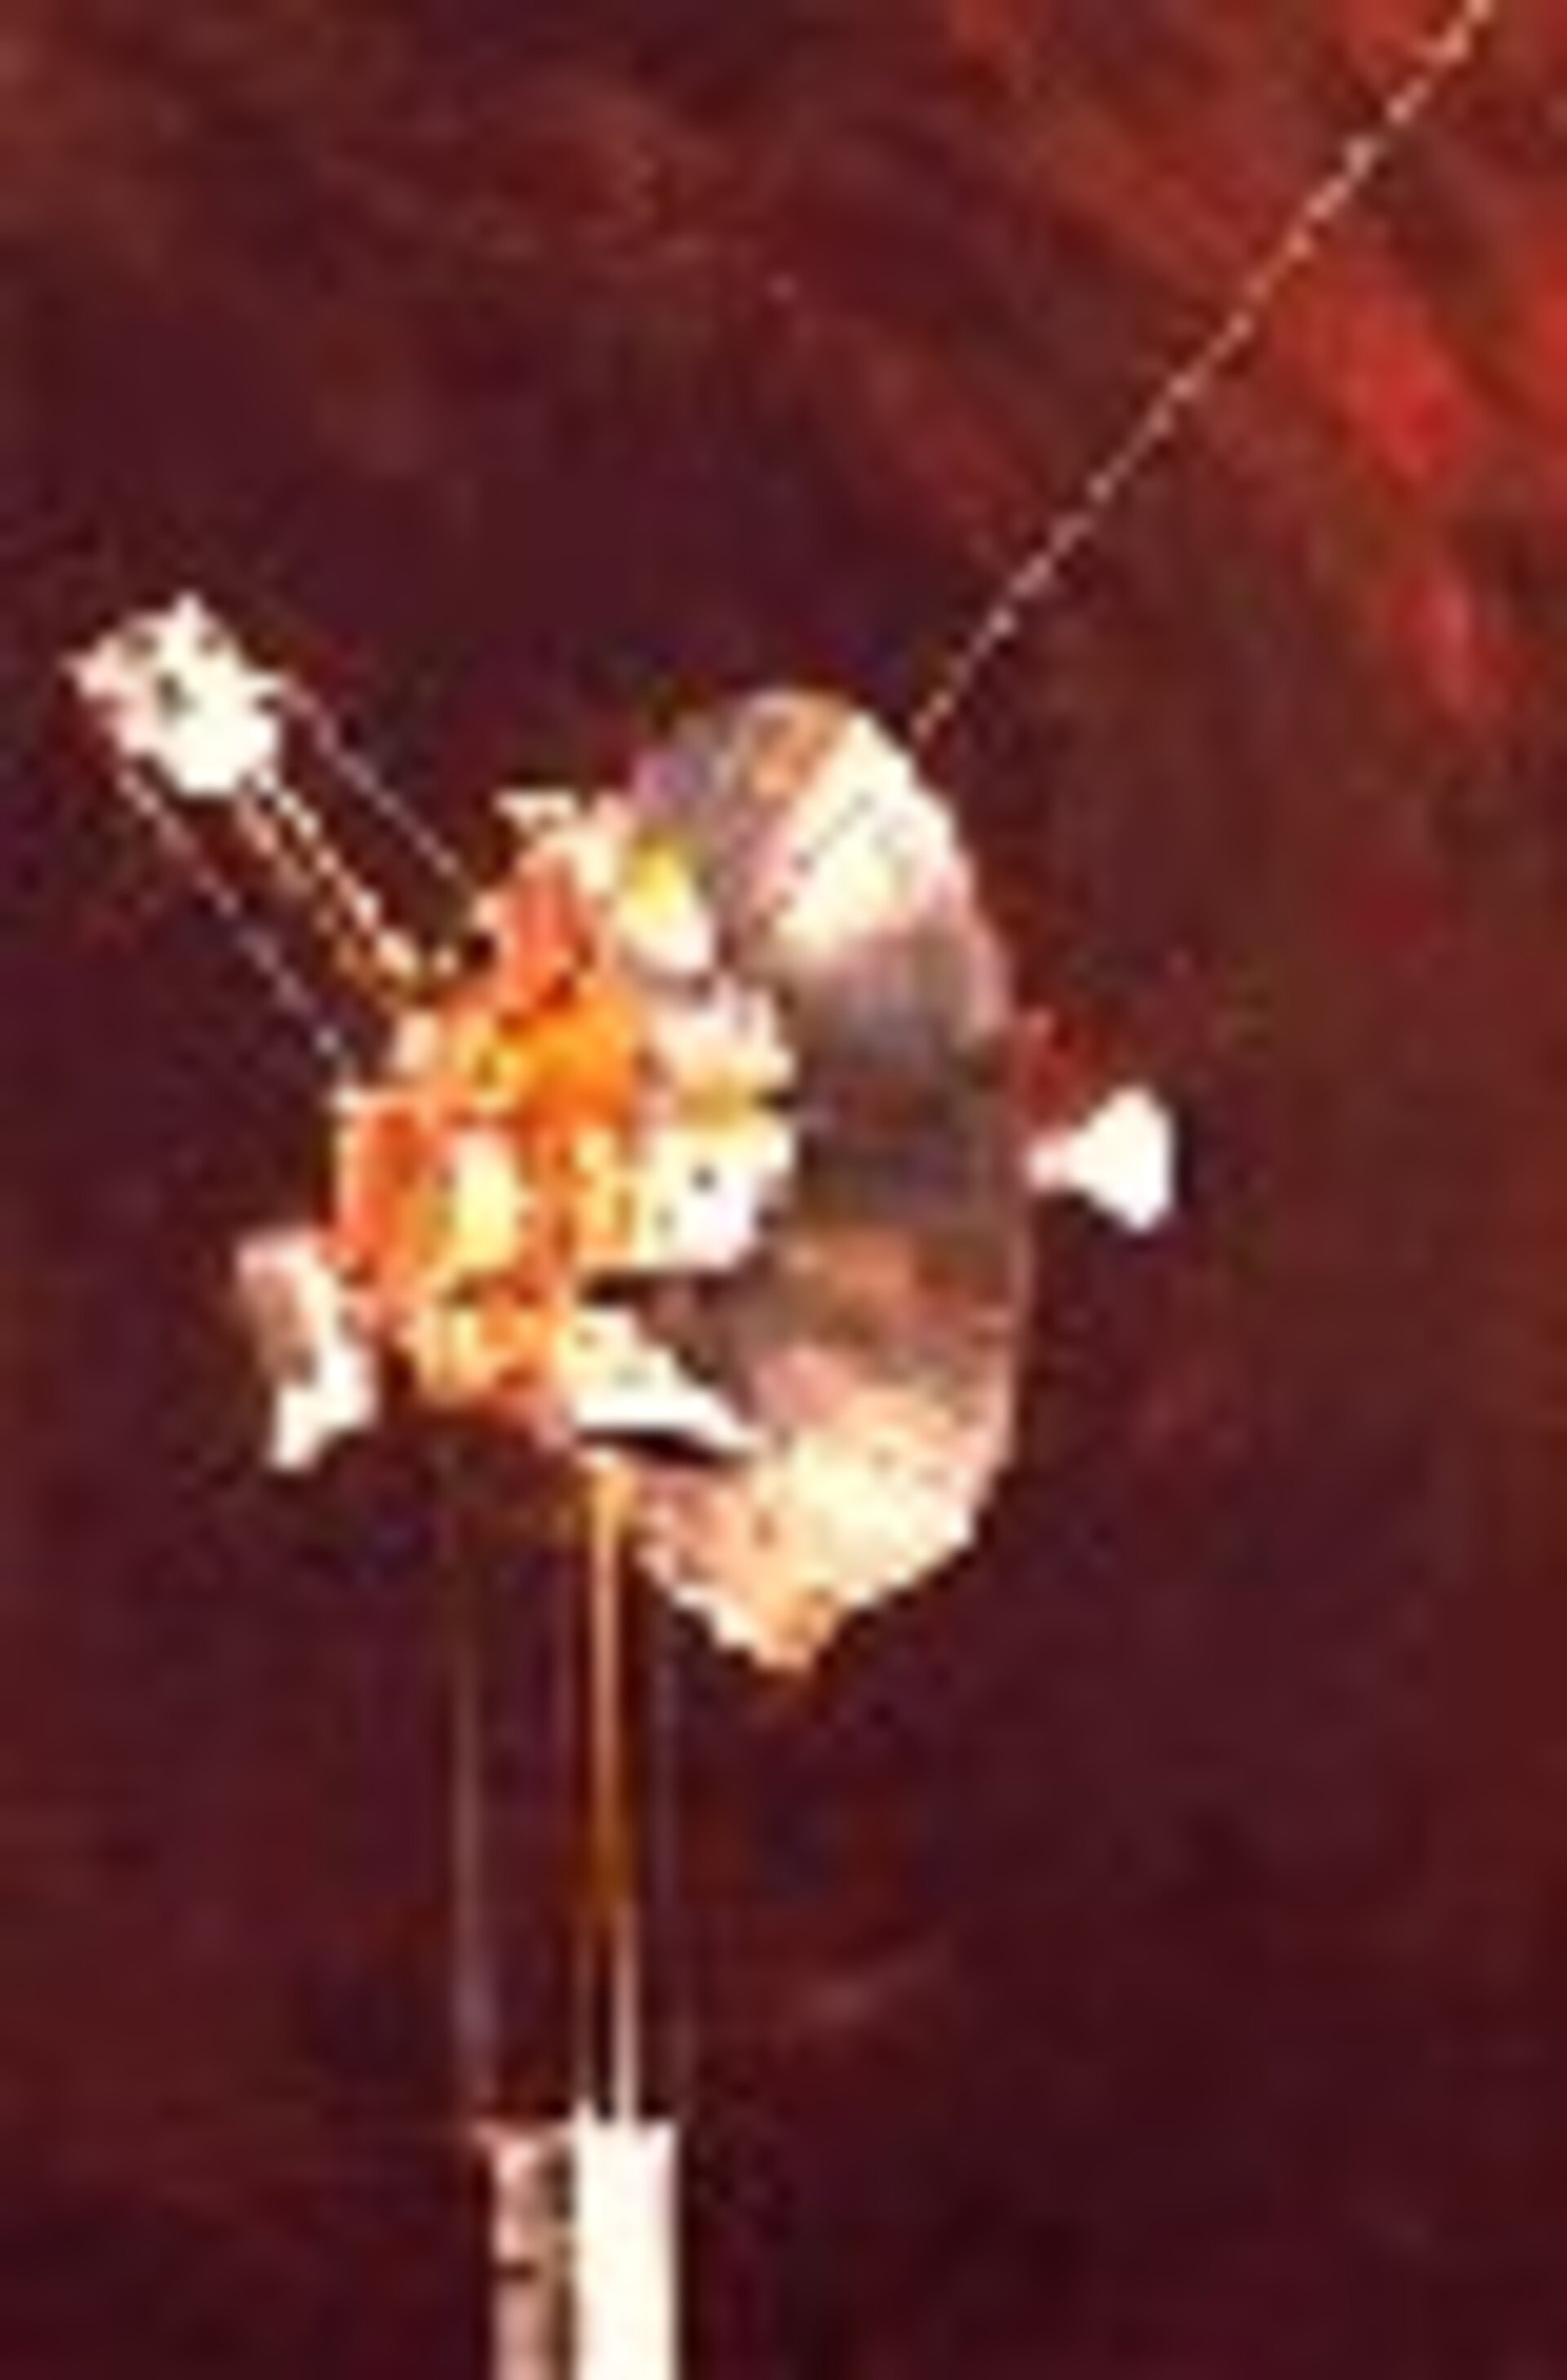 NASA's Pioneer 11 spacecraft